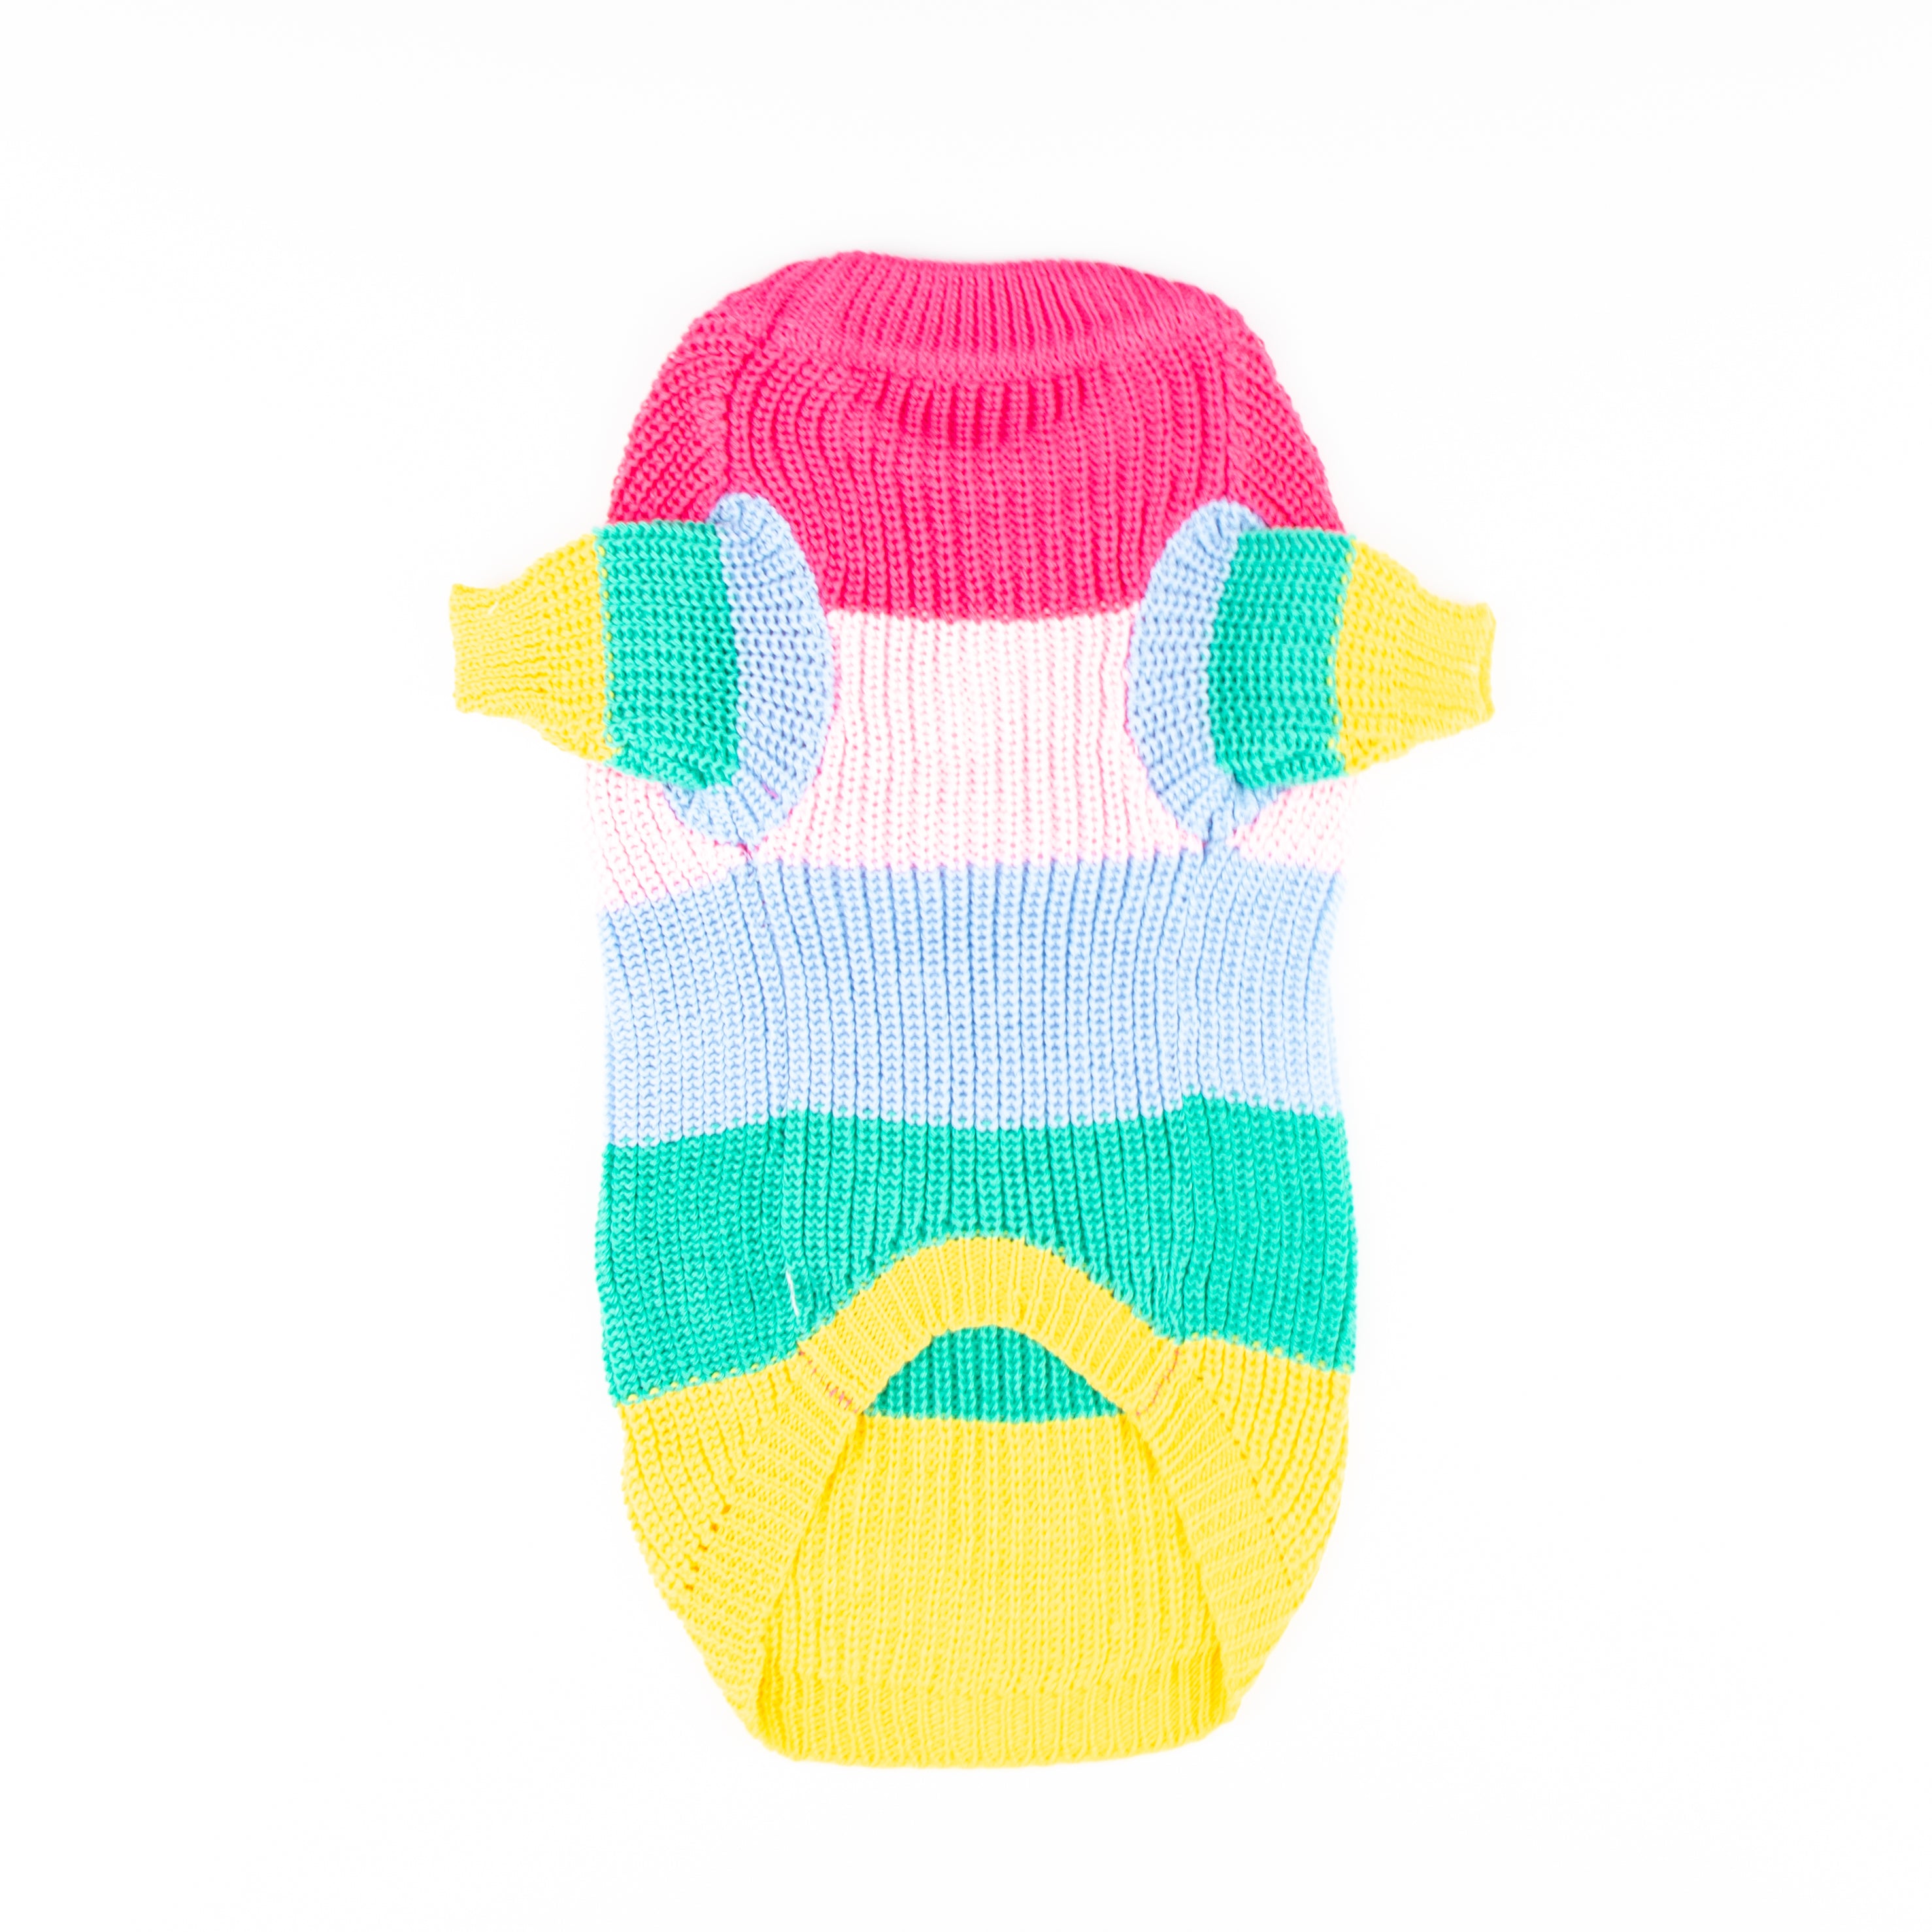 Rainbow Dog Sweater